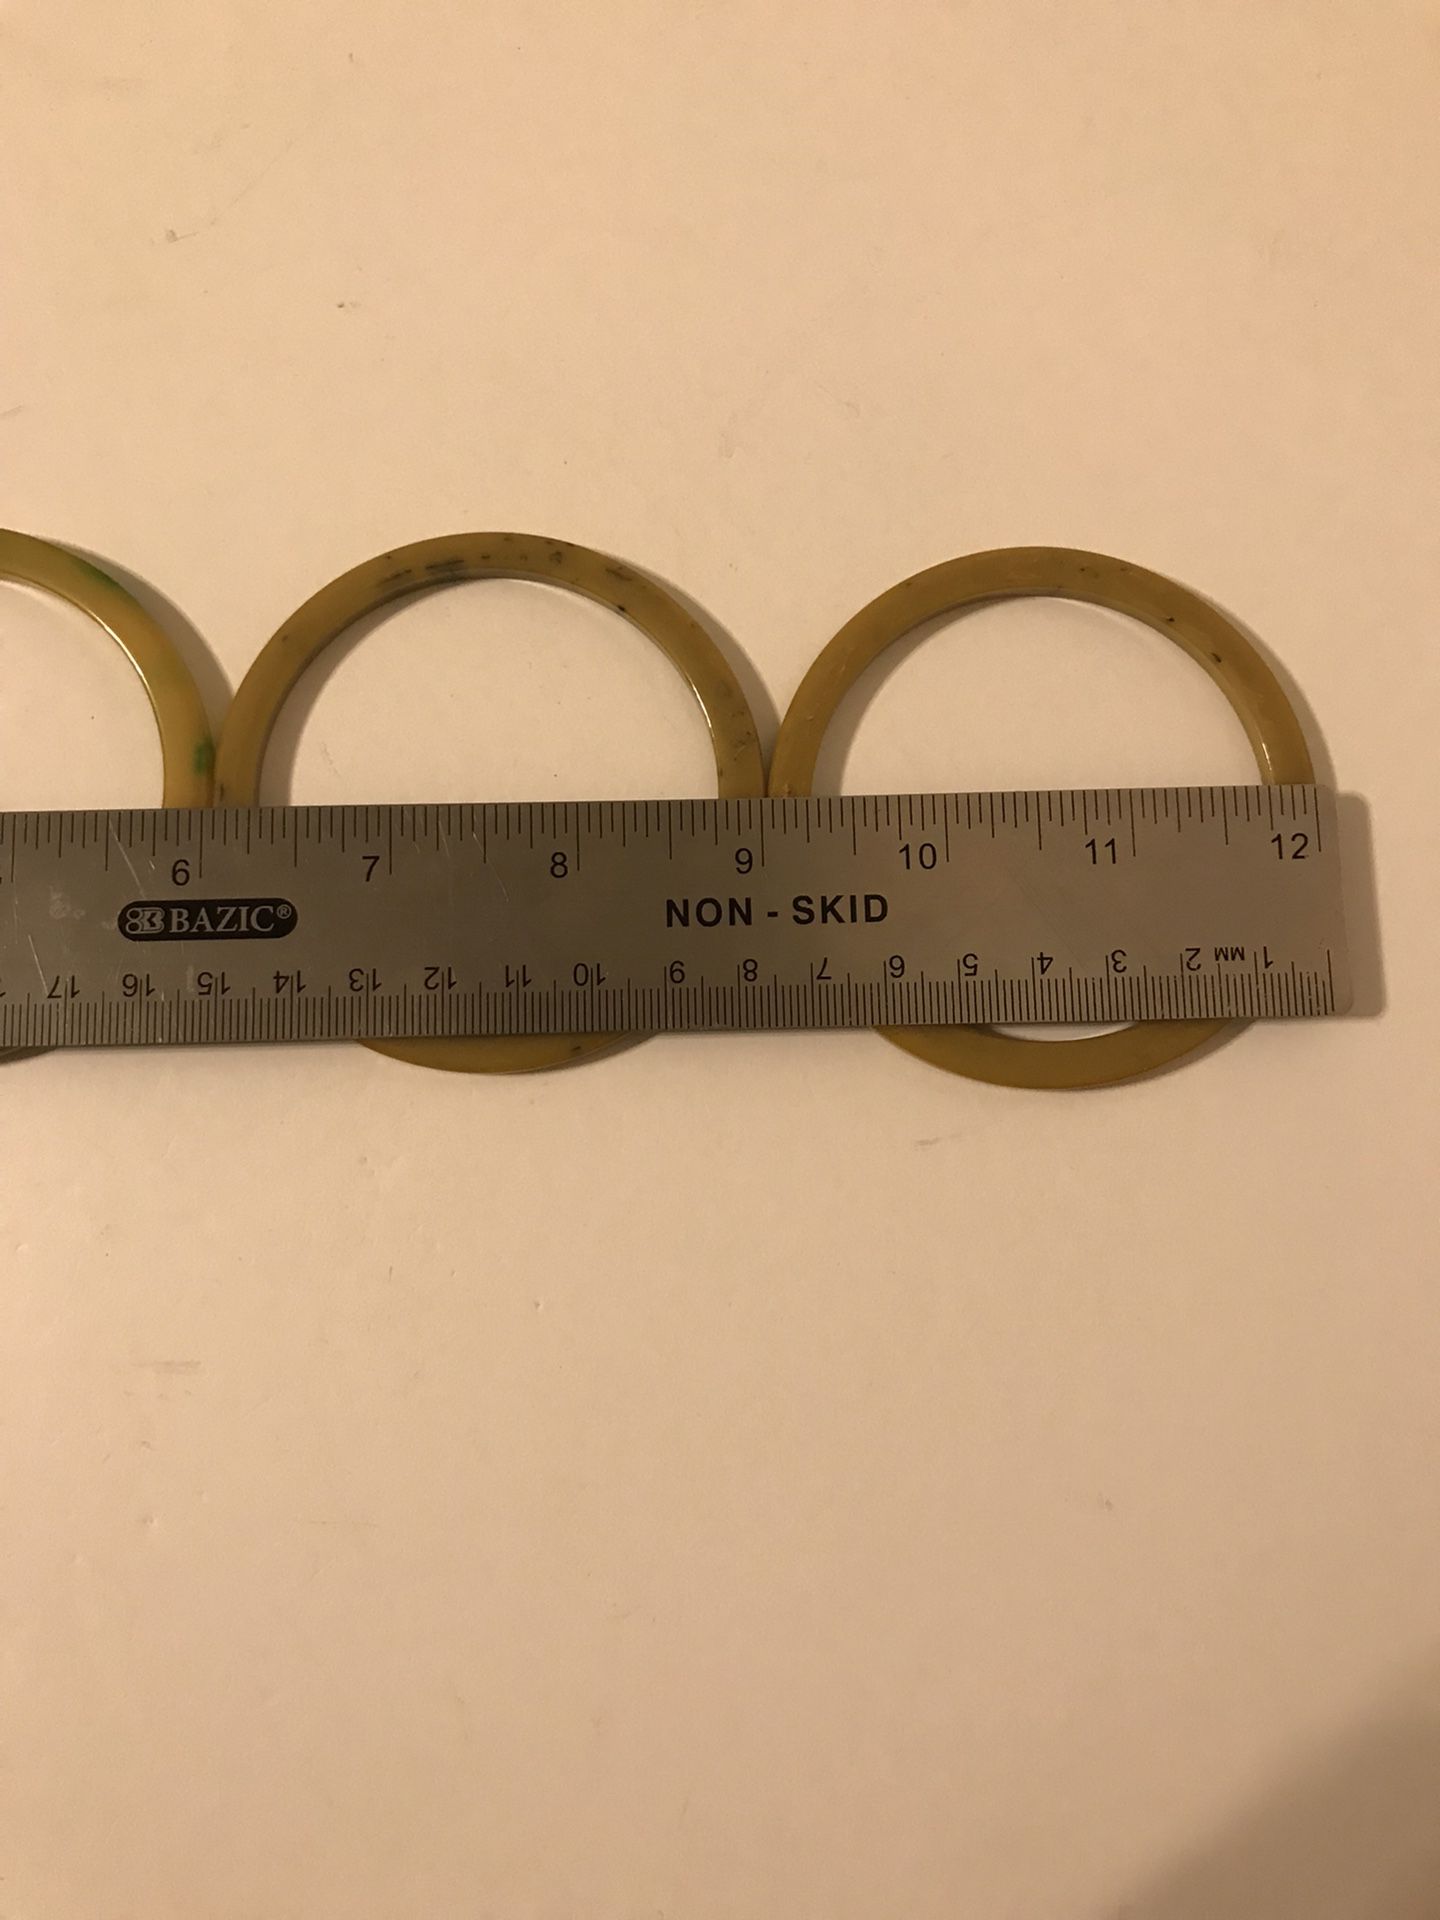 Antique Set of 4 Green & Yellow Swirl BakeLite Bangle 3” Bracelets Combo